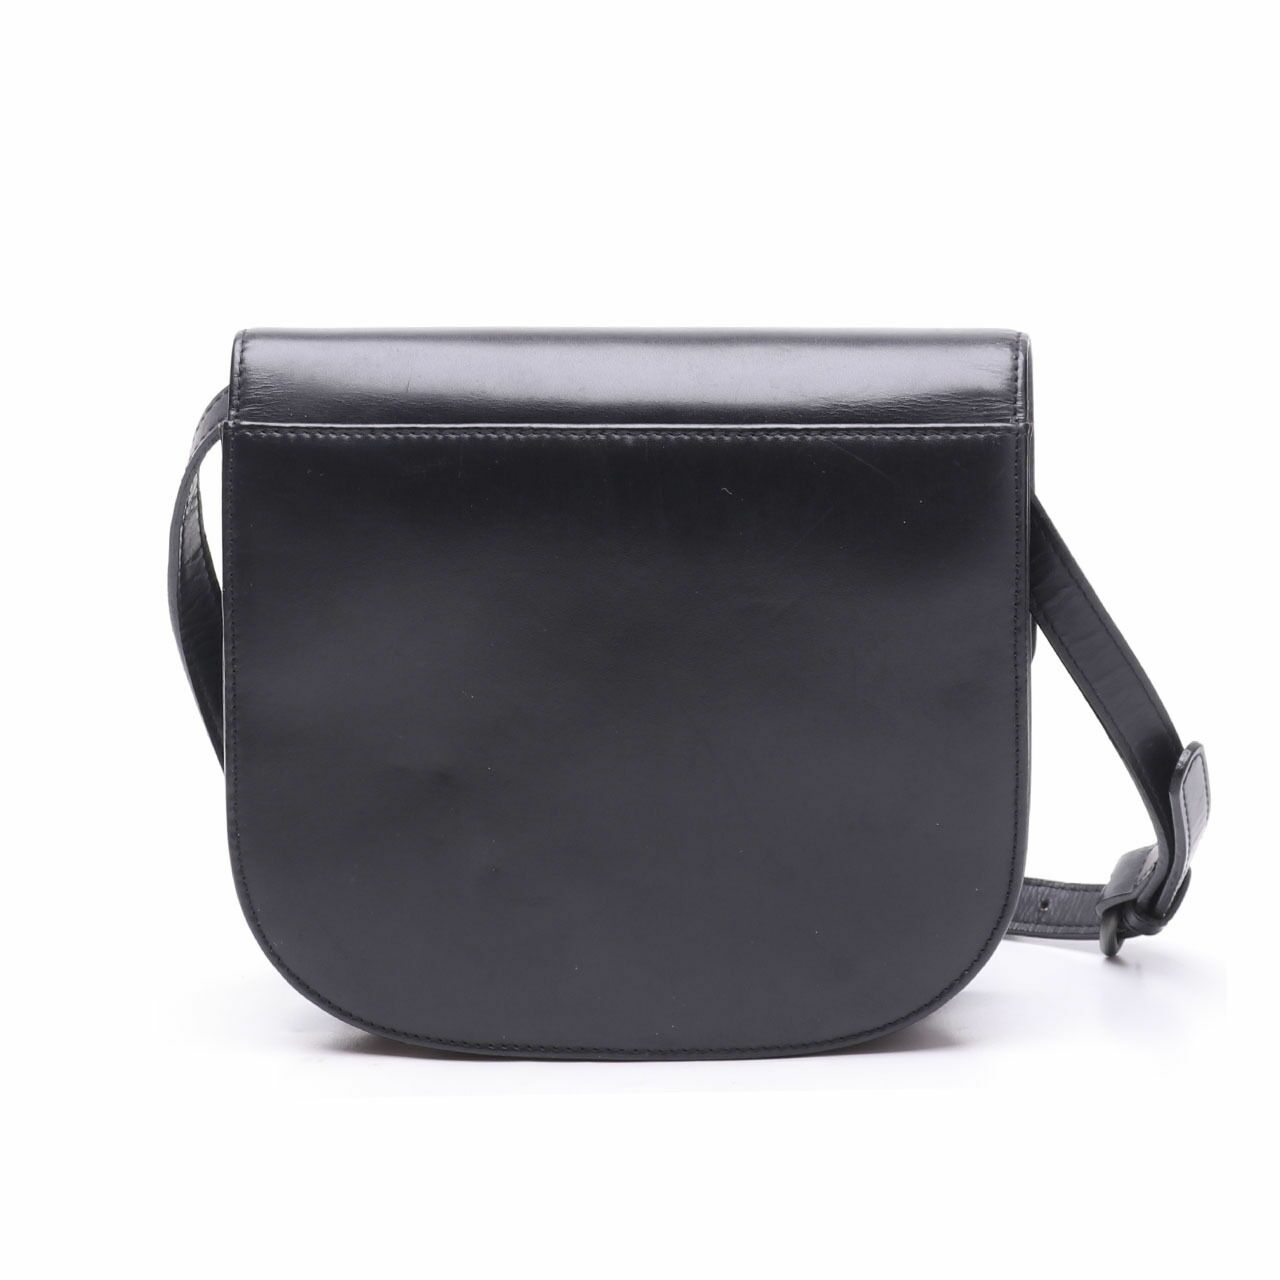 Pierre Cardin Black Crossbody Bag